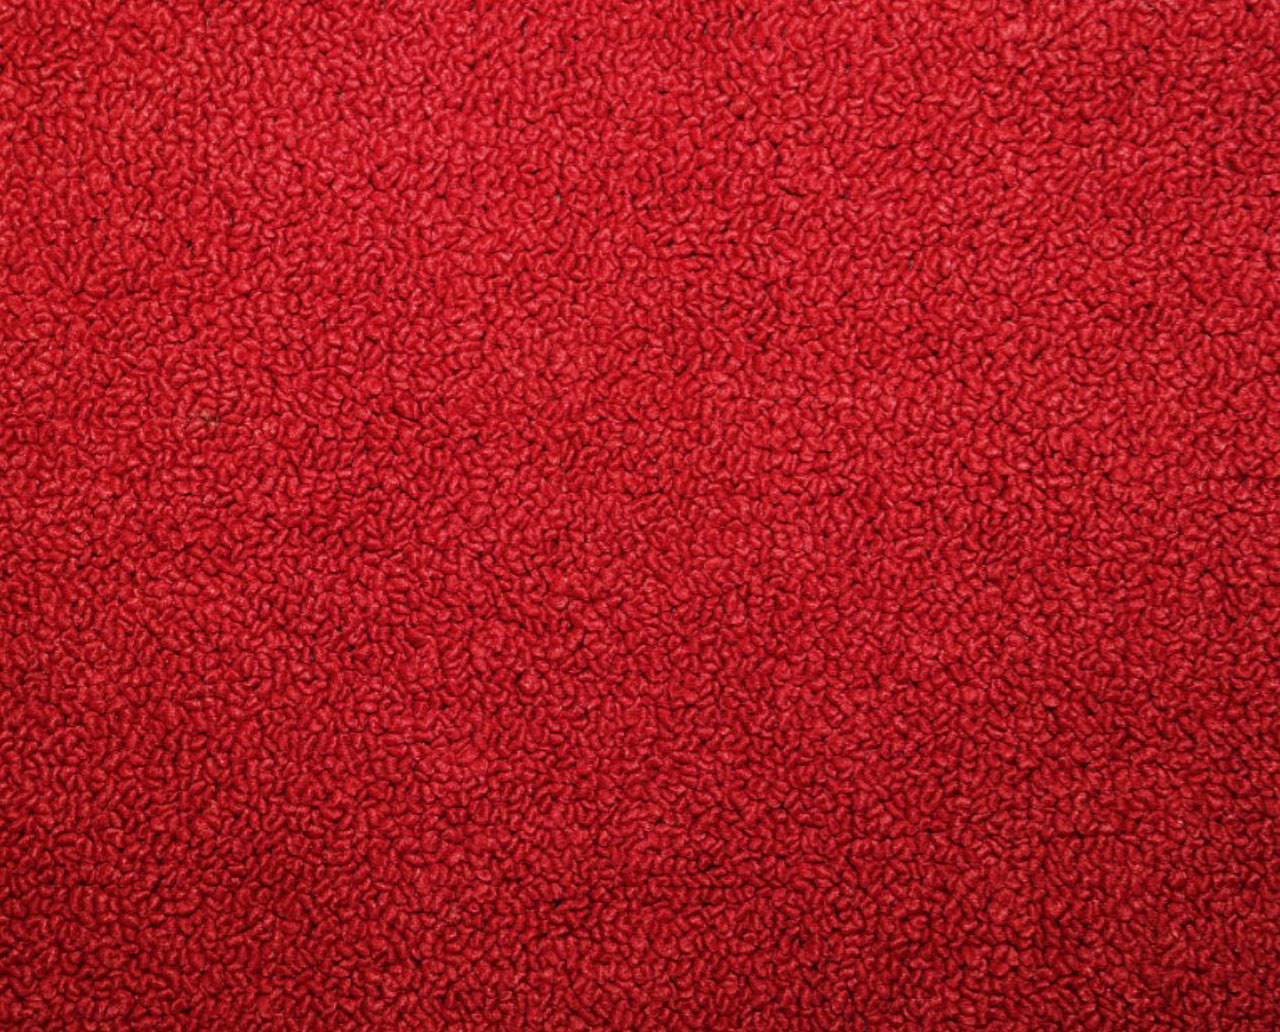 Holden Torana LC Torana S Coupe 42B Calypso Red Carpet (Image 1 of 1)